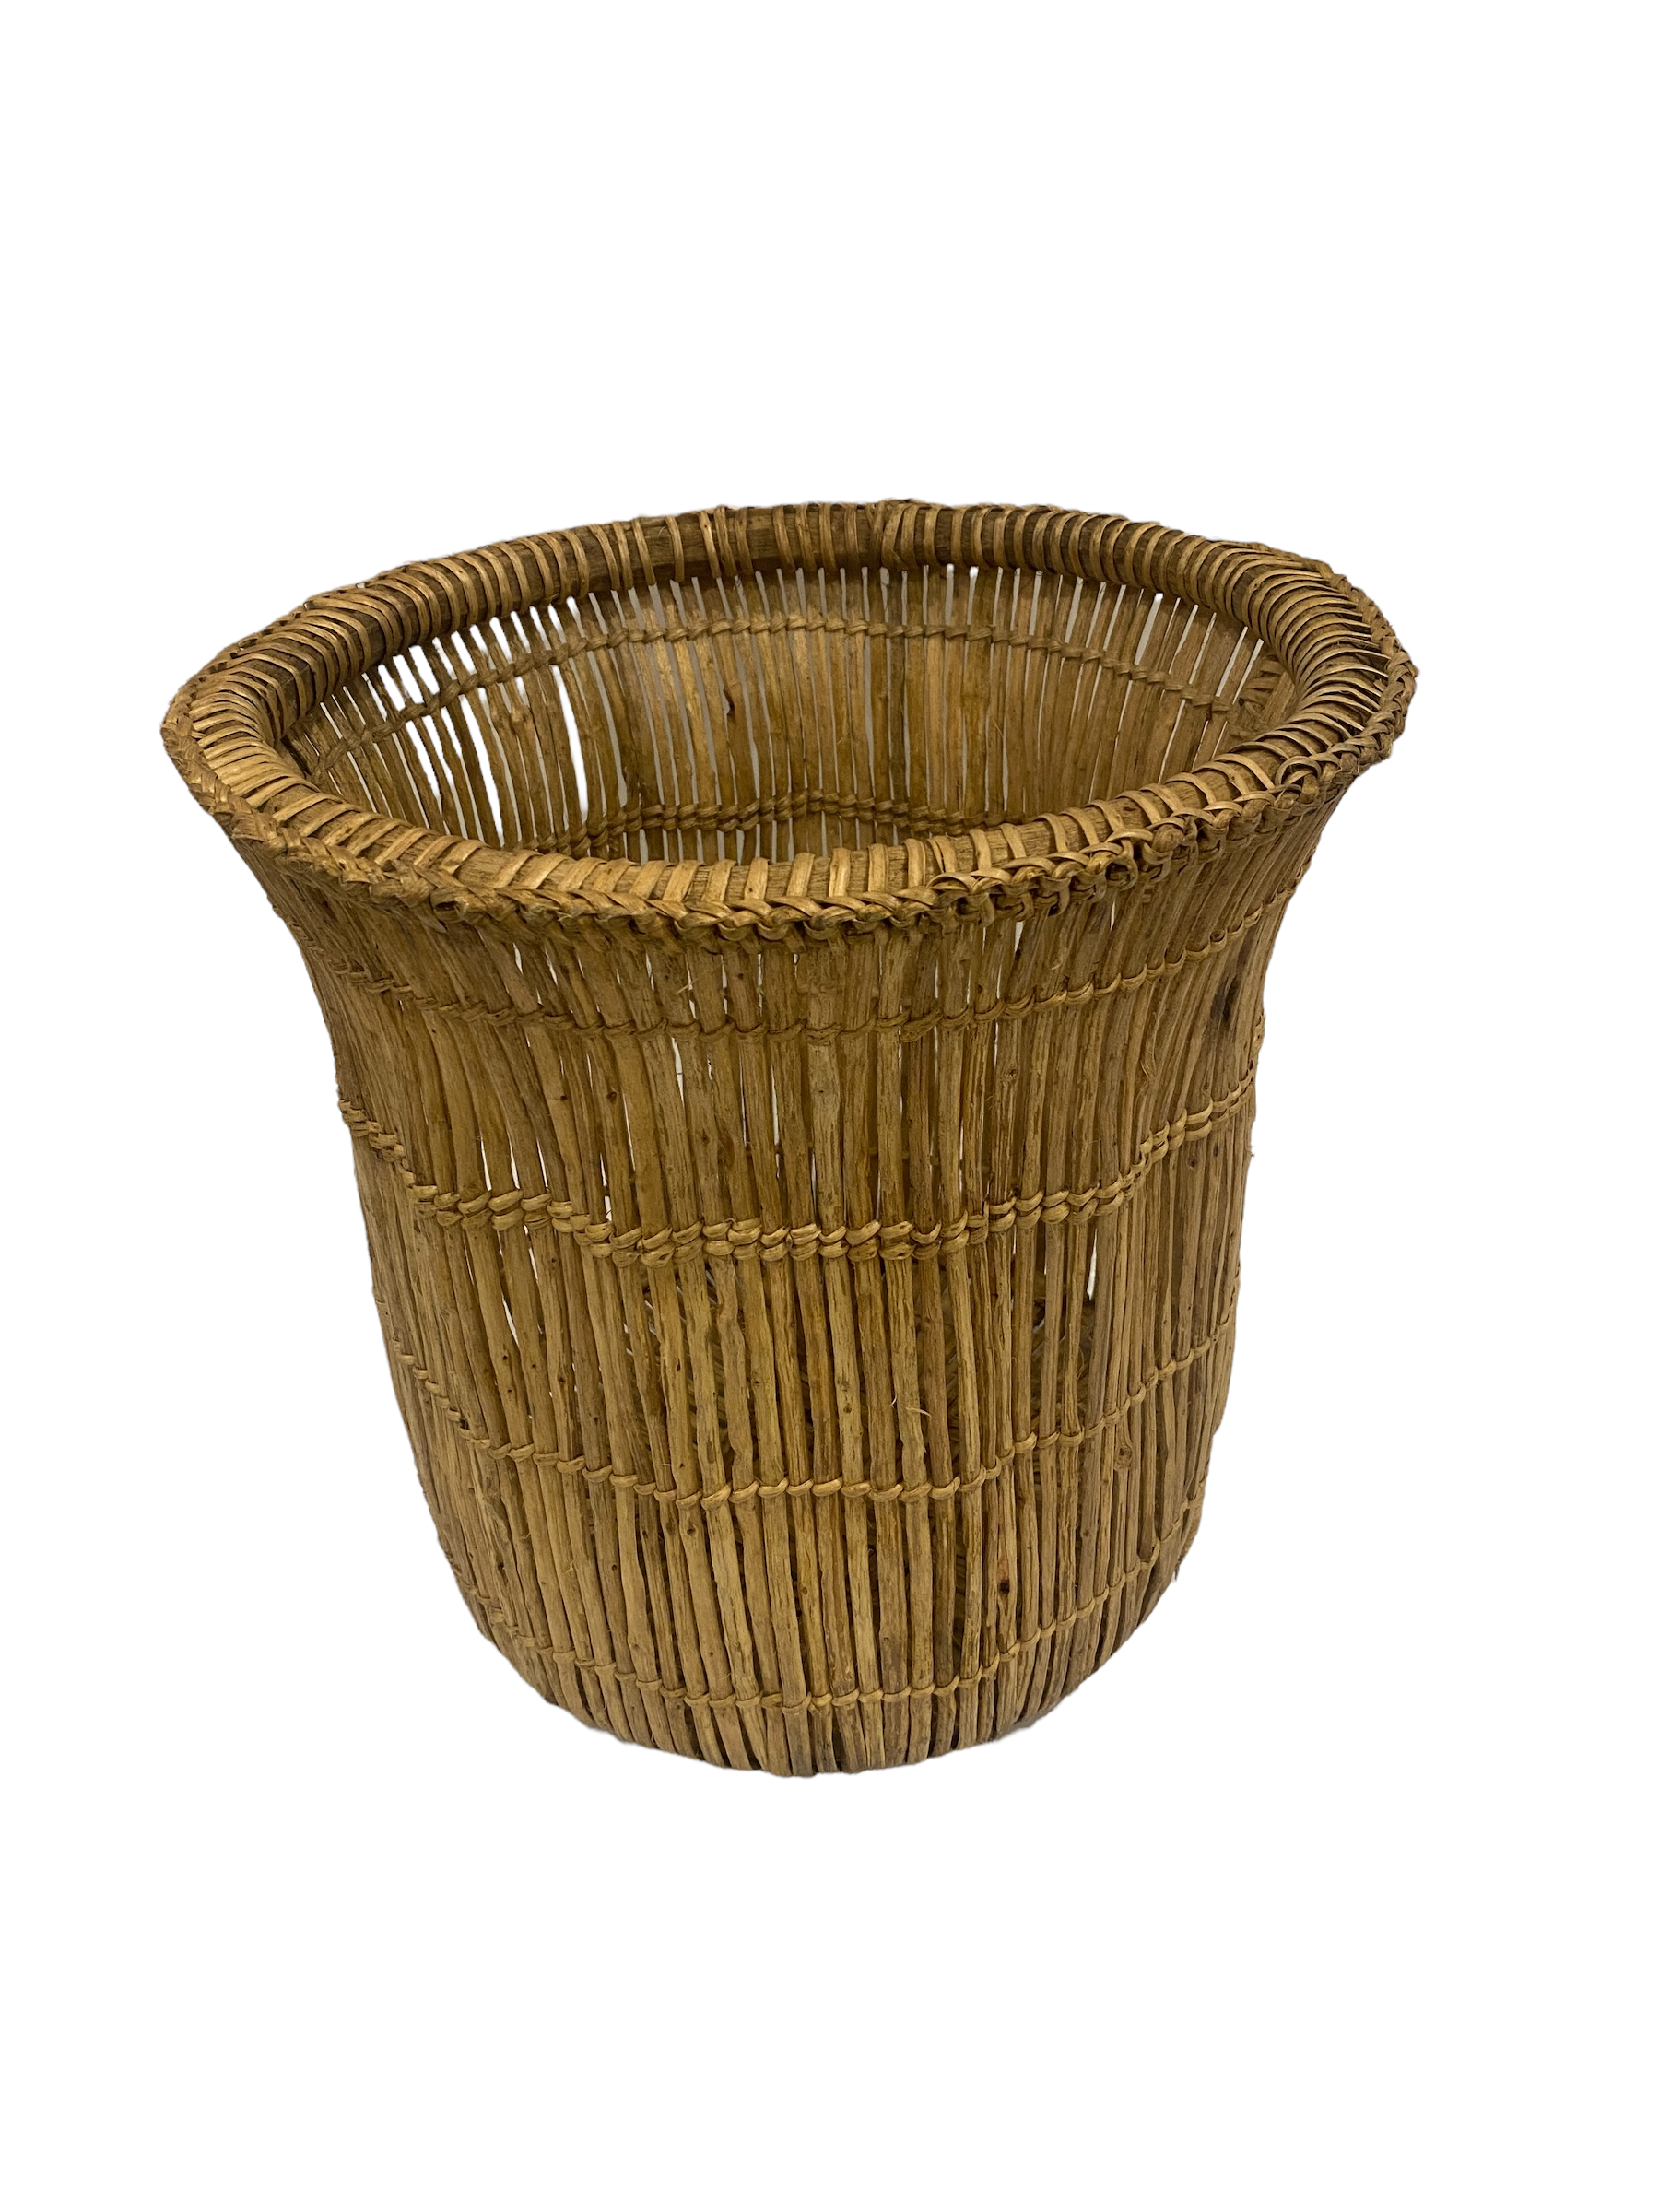 botanicalboysuk Fishing Basket - Zambia (tr63) Small